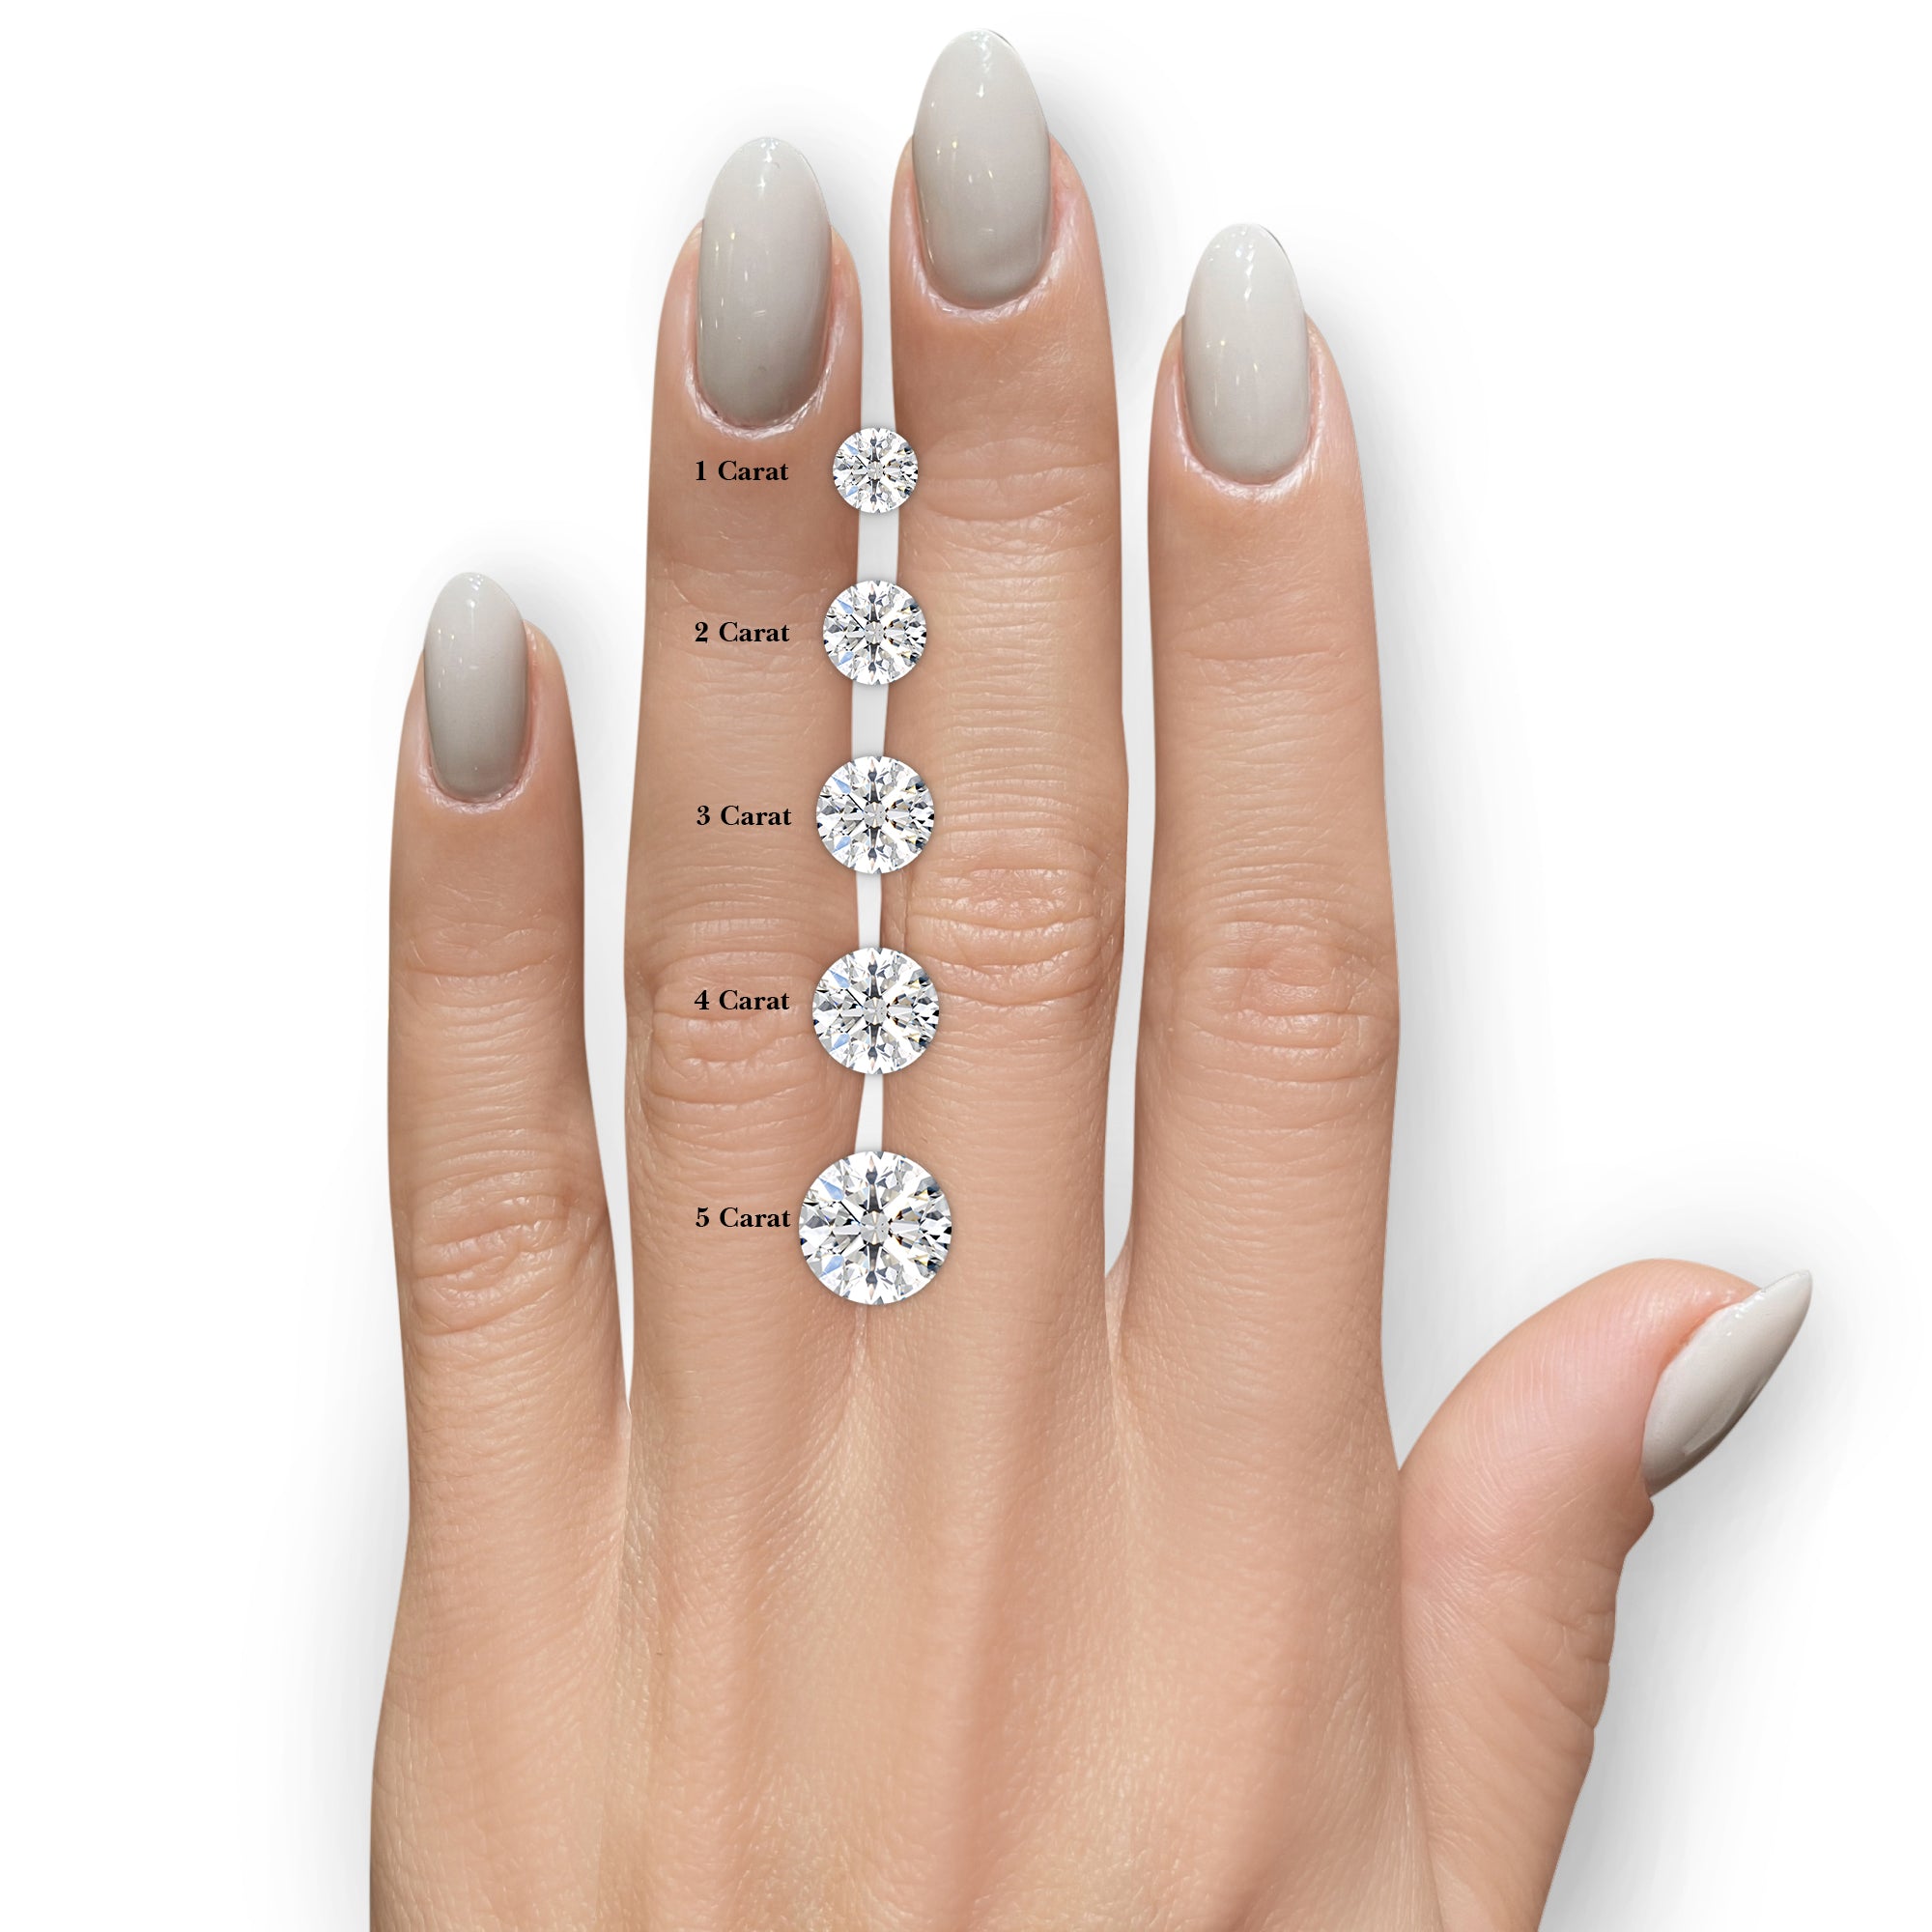 La Fleur Moissanite & Diamonds Ring -14K White Gold